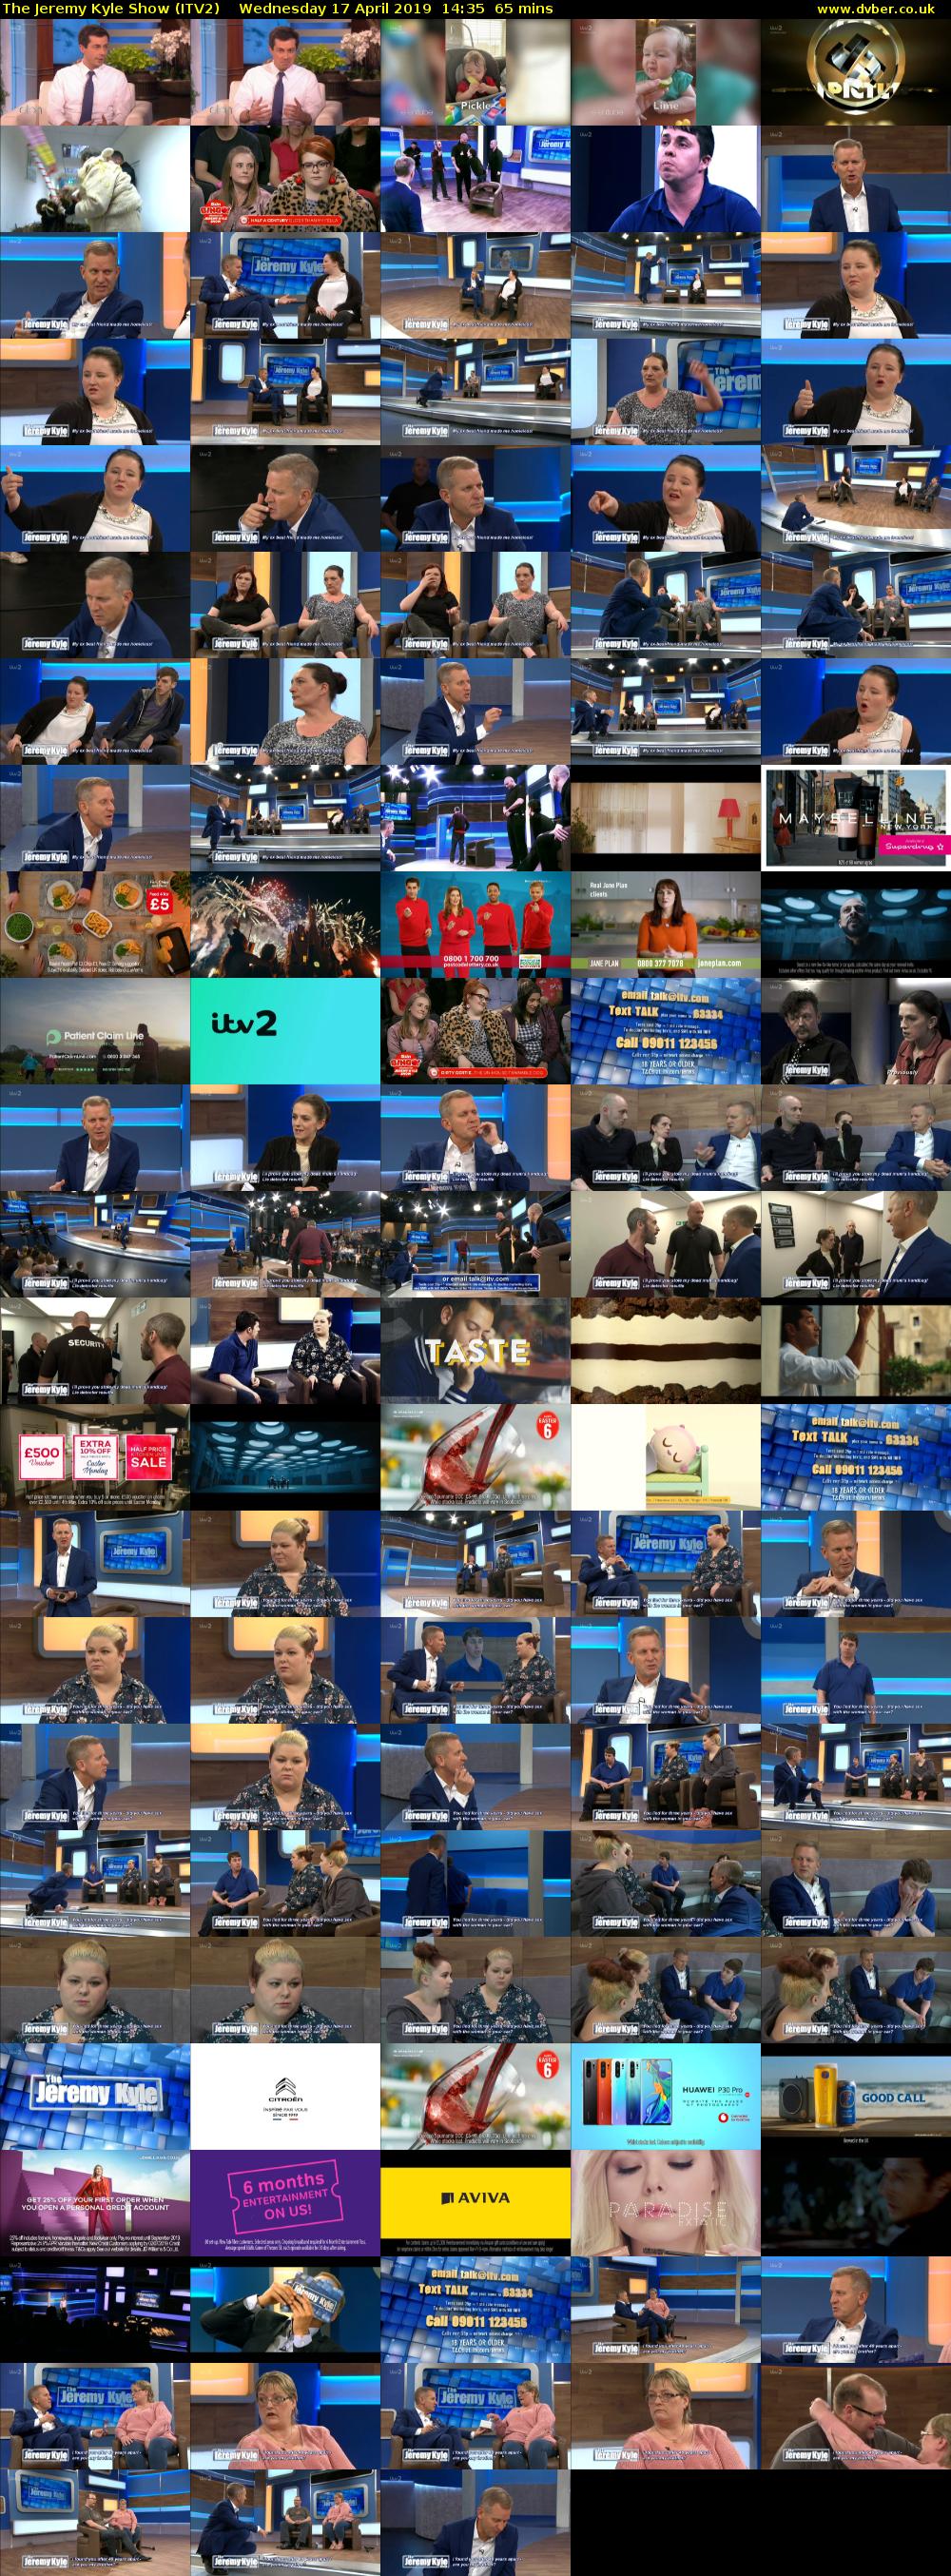 The Jeremy Kyle Show (ITV2) Wednesday 17 April 2019 14:35 - 15:40